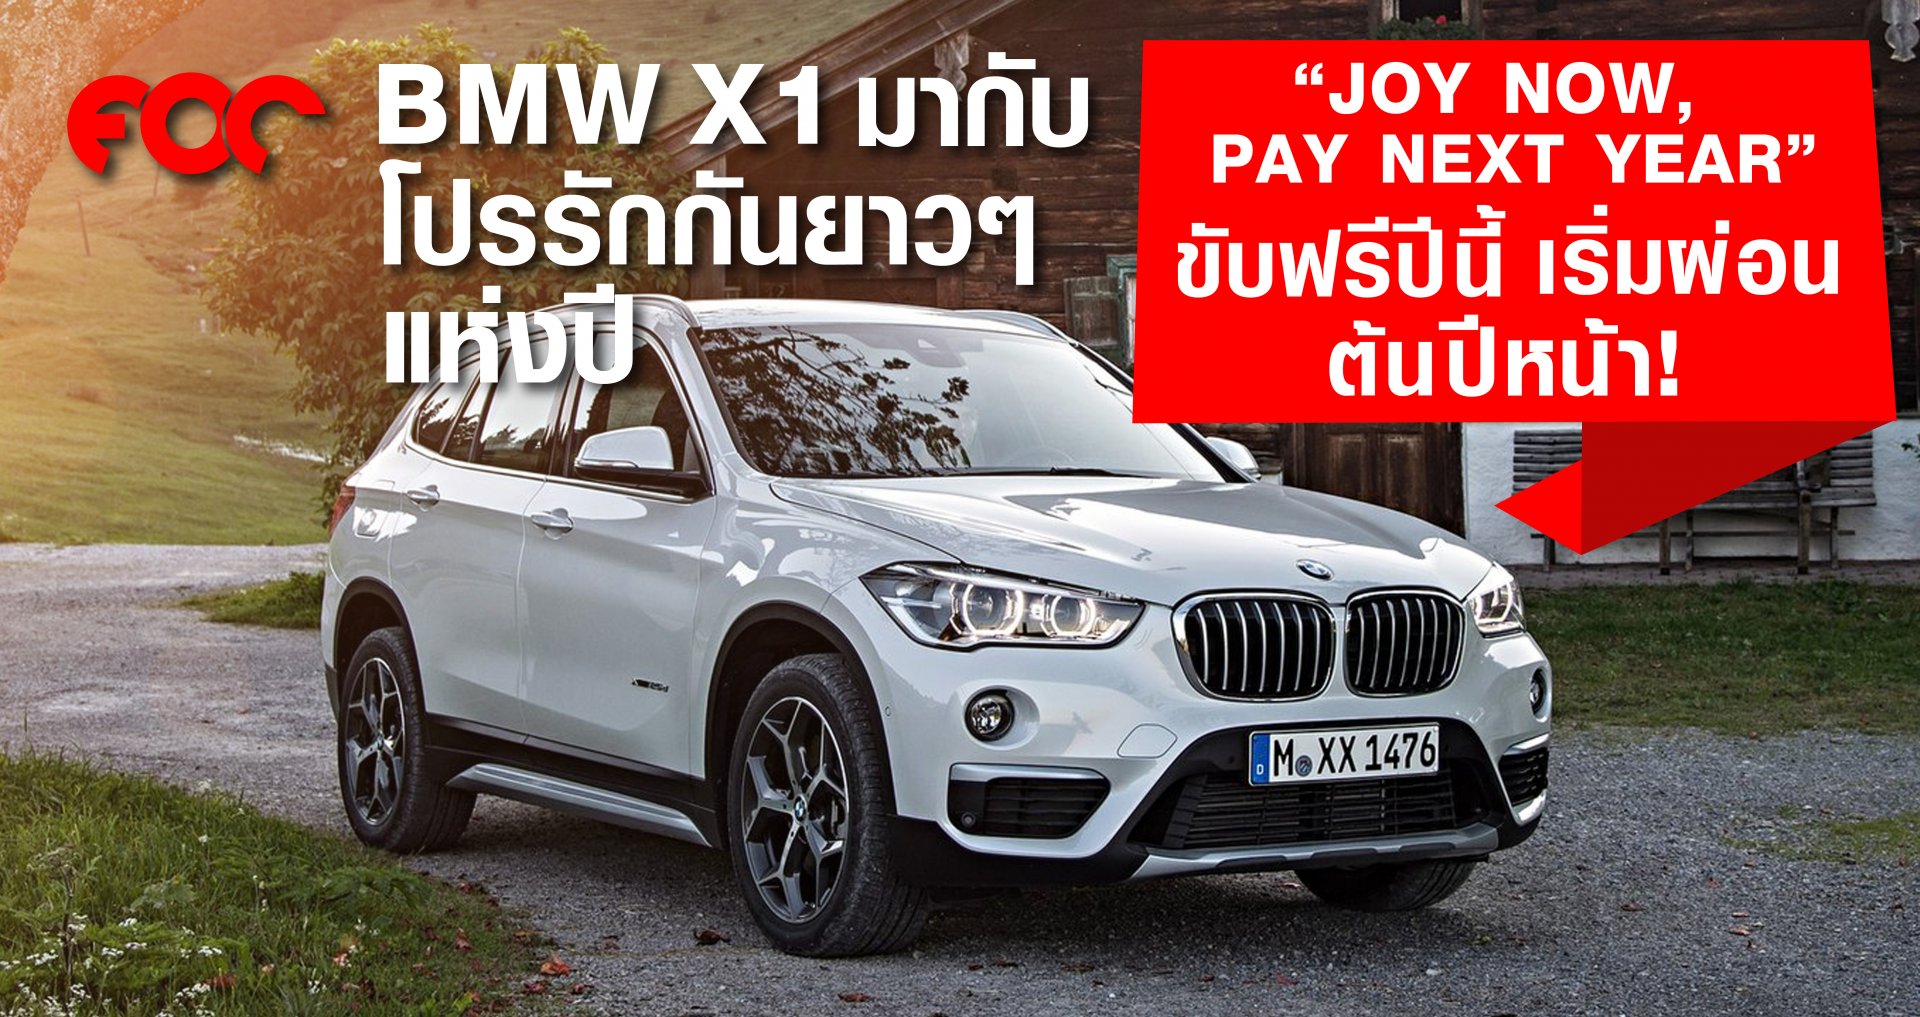 BMW X1 มากับโปรรักกันยาวๆแห่งปี “JOY NOW, PAY NEXT YEAR” ขับฟรีปีนี้ เริ่มผ่อนต้นปีหน้า! 